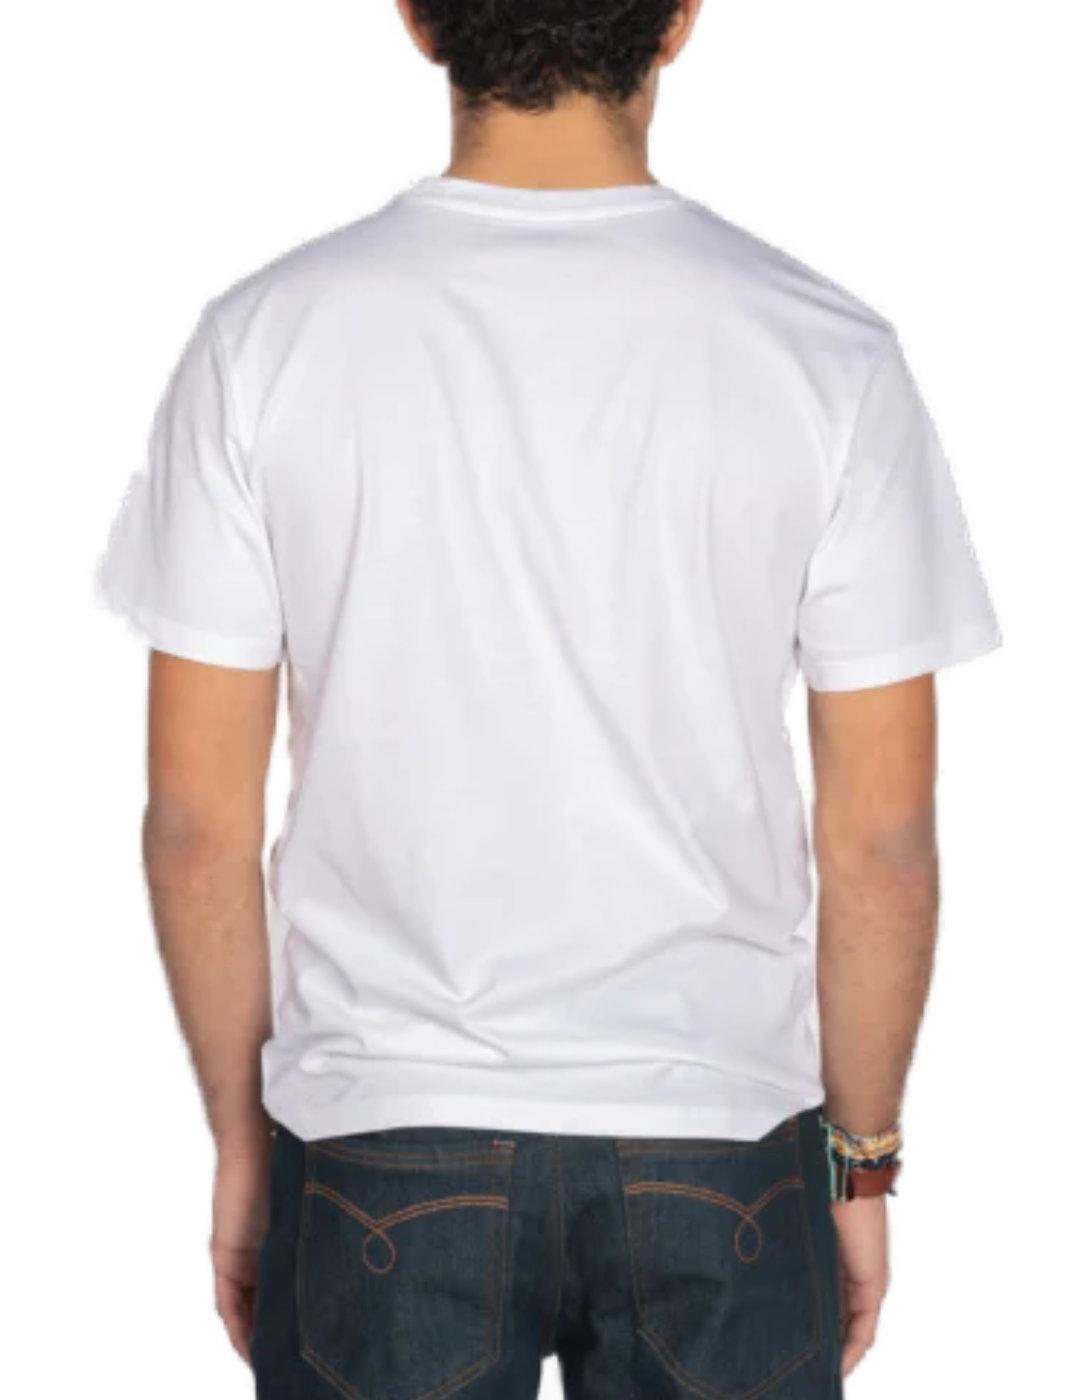 Camiseta Harper&Neyer new england blanca manga corta  hombre